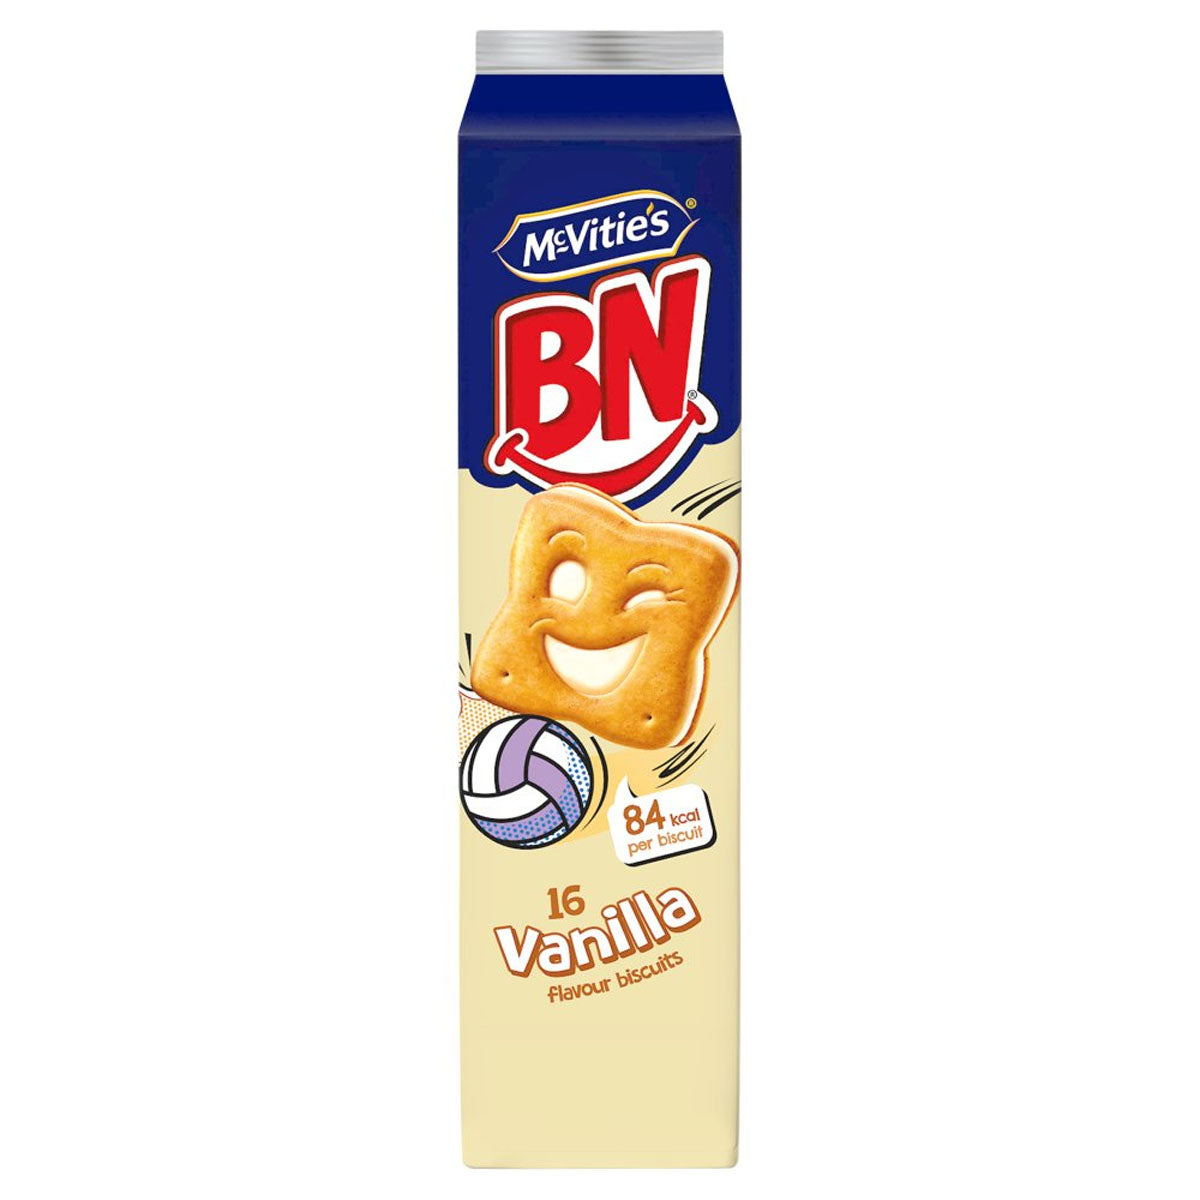 McVitie's - BN Vanilla Flavour Biscuits - 285g - Continental Food Store